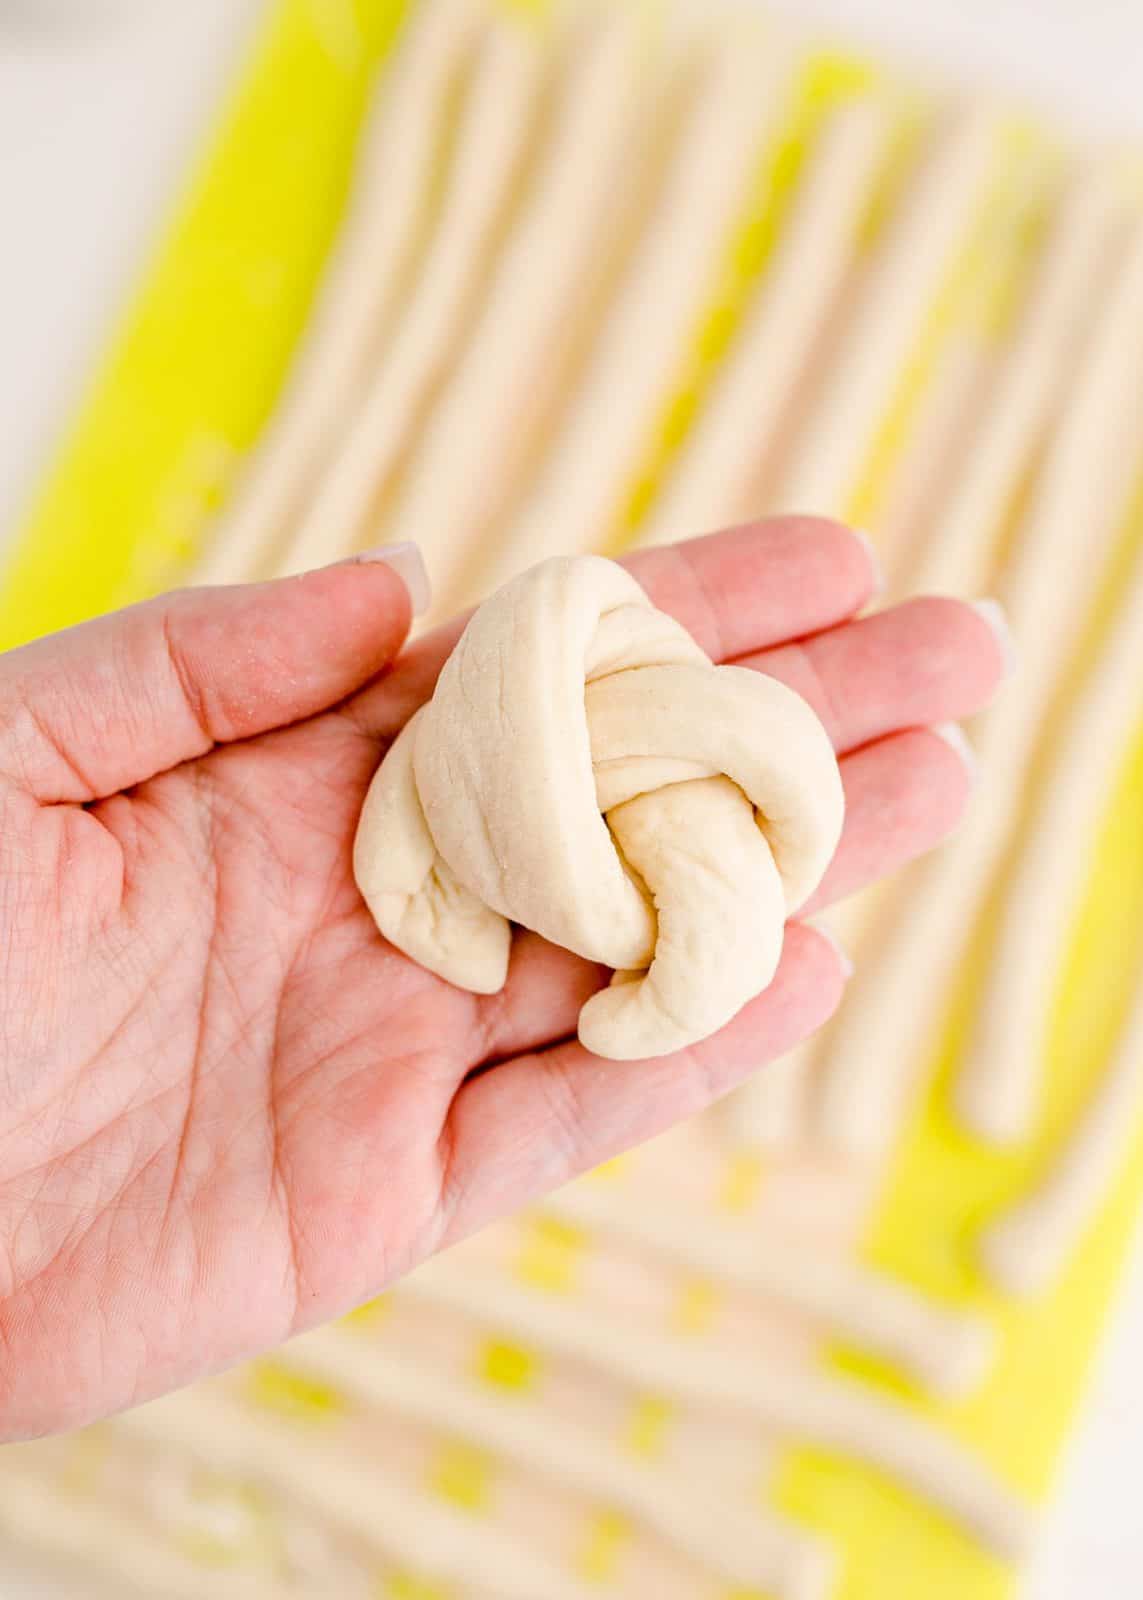 Dough tied into a knot.